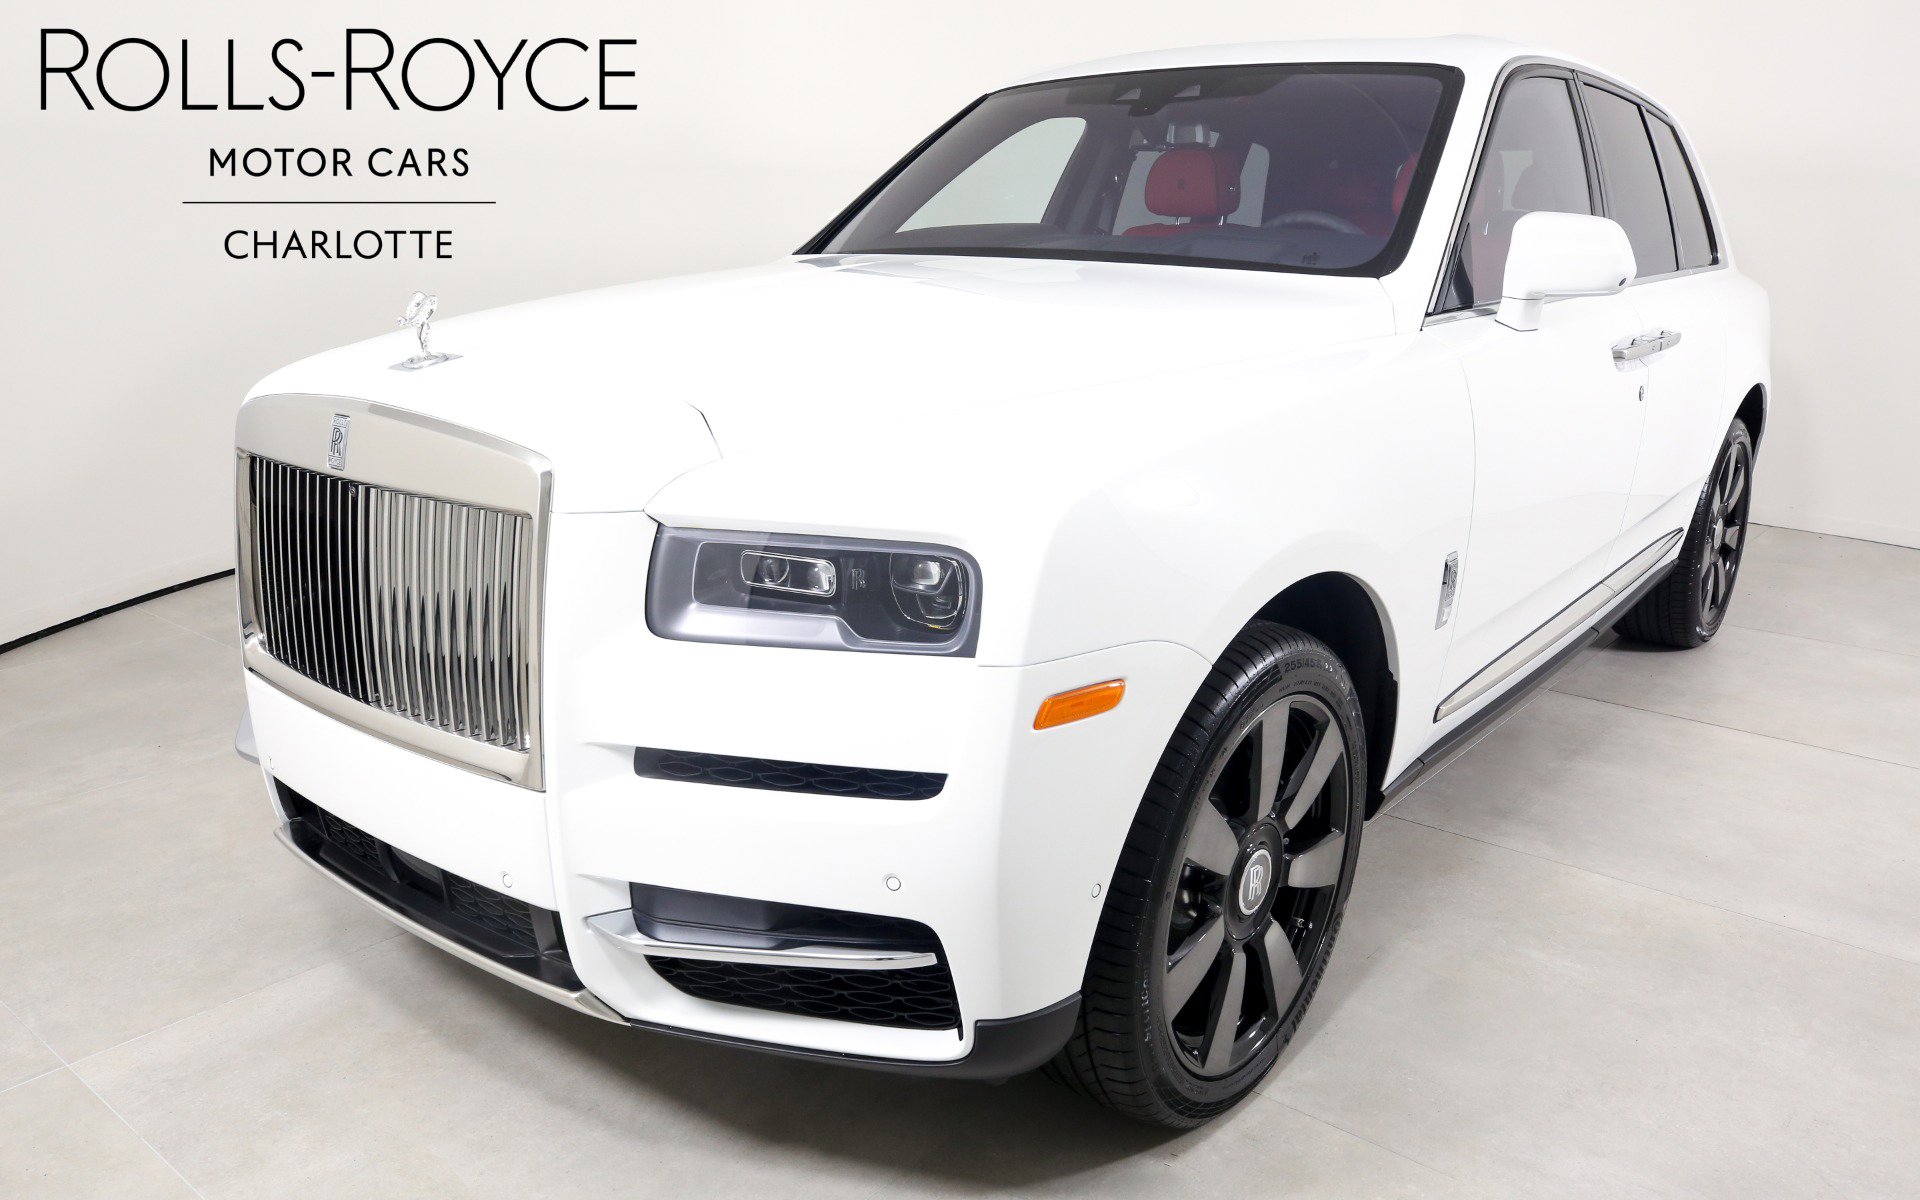 New 2023 Rolls-Royce Ghost For Sale ($418,425)  Rolls-Royce Motor Cars  Philadelphia Stock #23R109